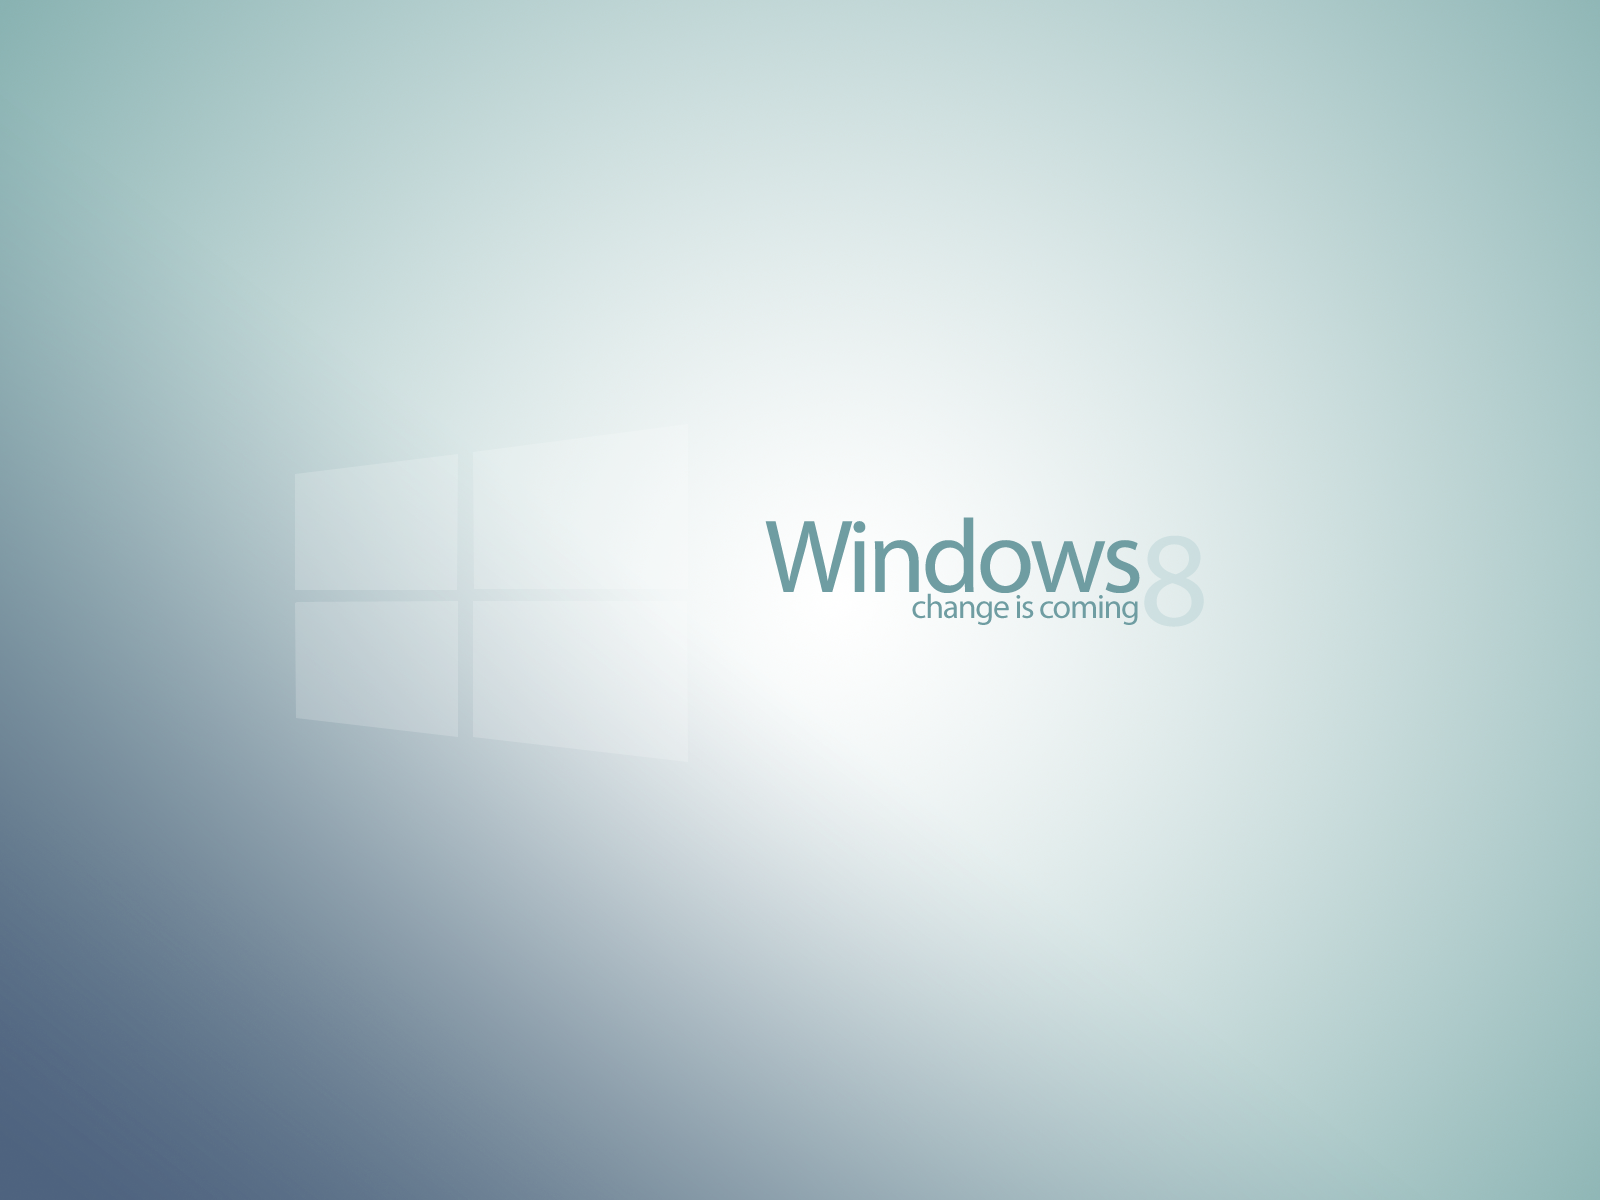 New Windows Logo Concept